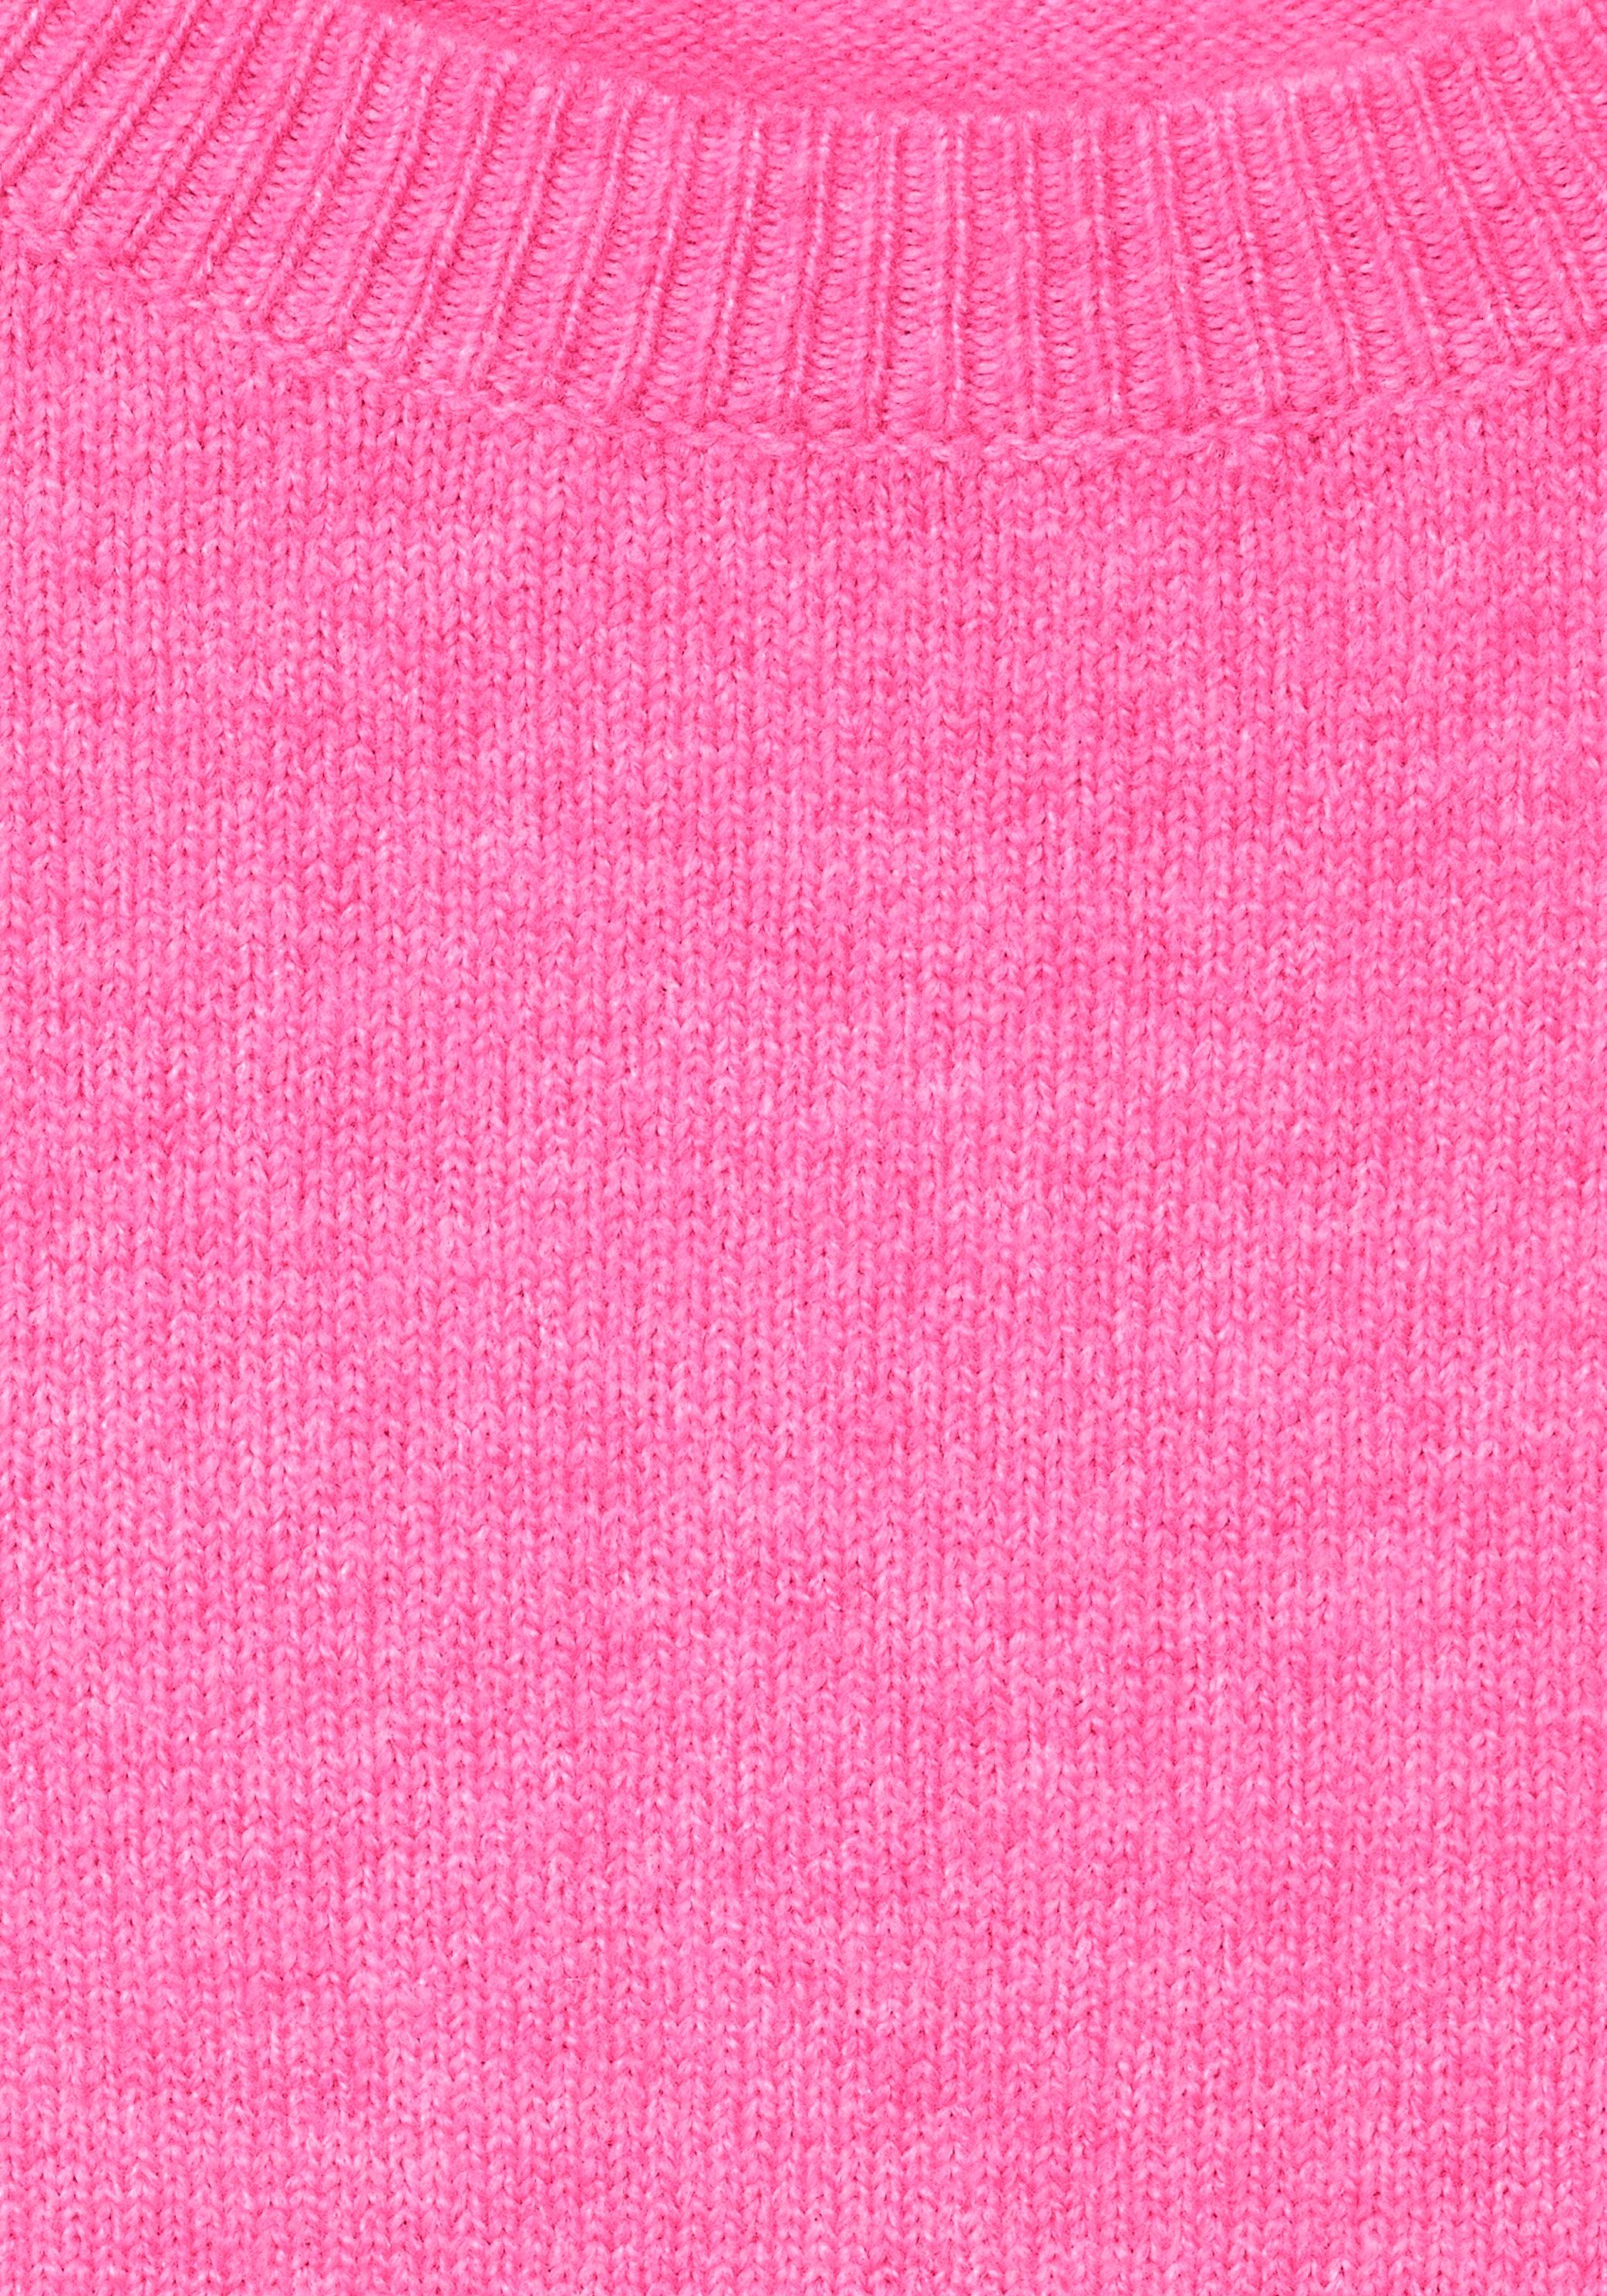 STREET ONE Strickpullover in crush melange Unifarbe pink Melangeoptik mit